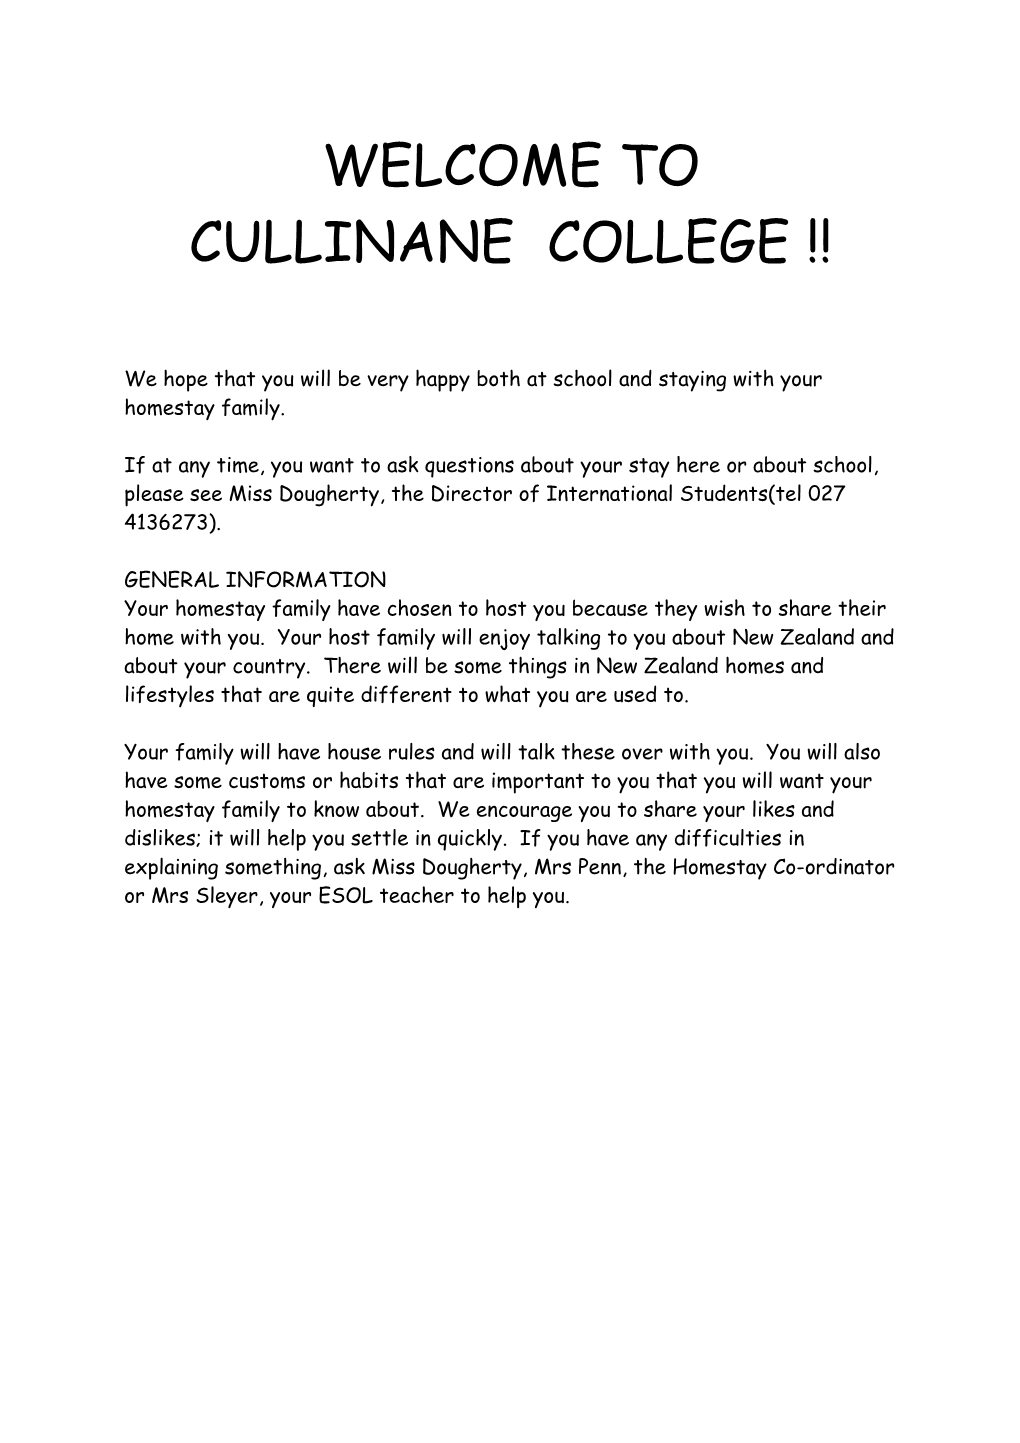 Cullinane College